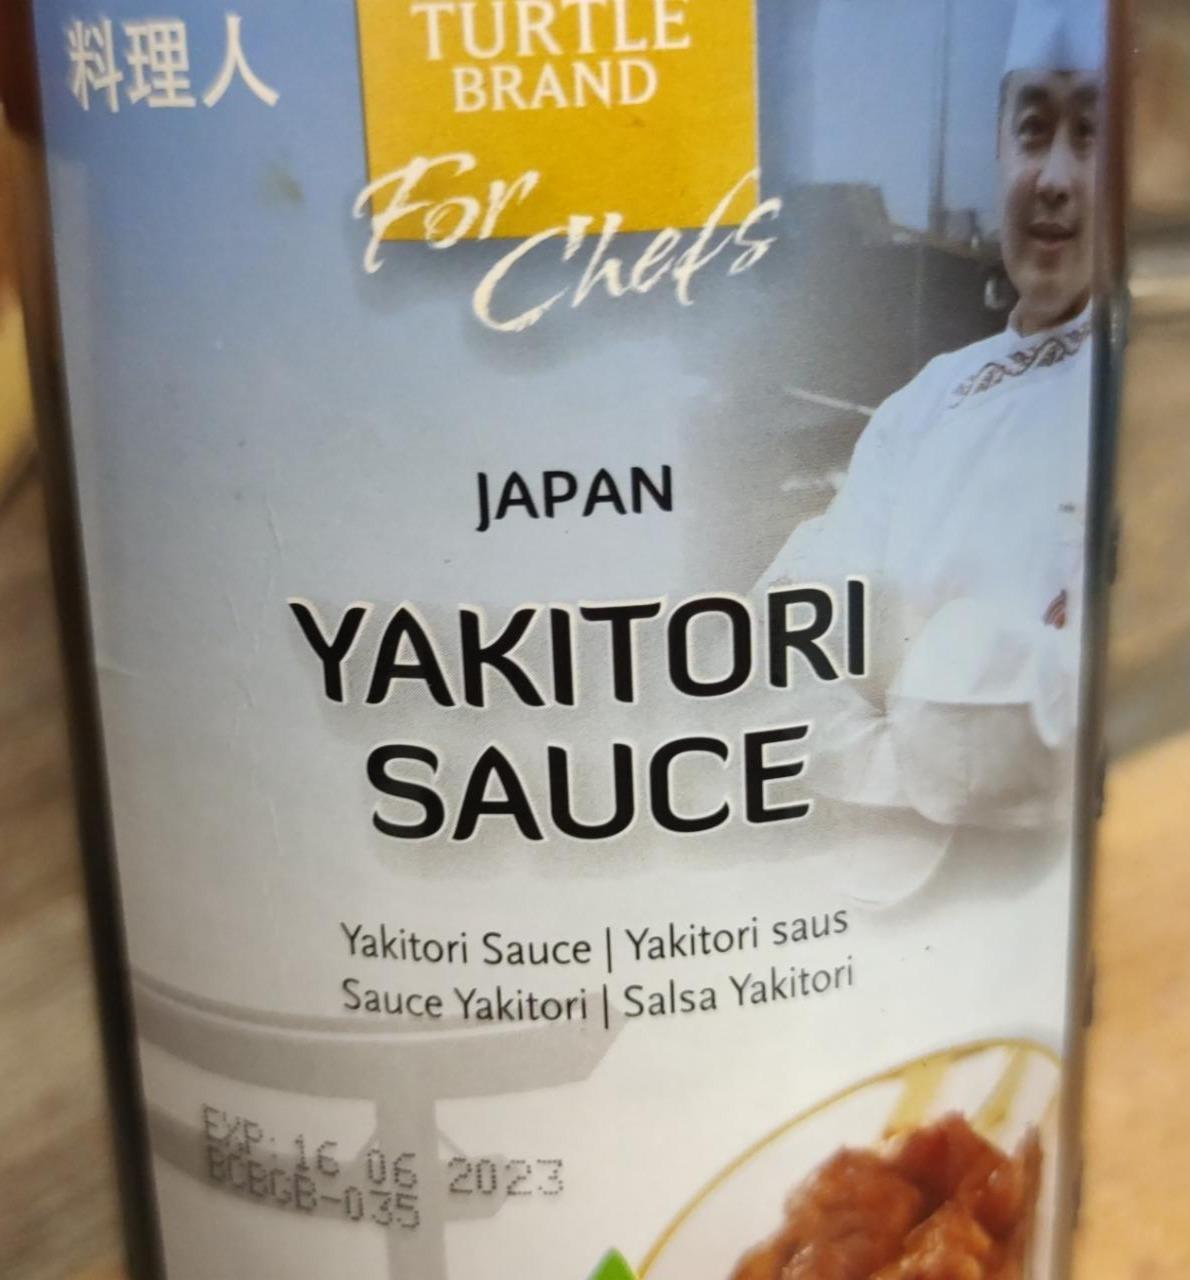 Fotografie - Japan Yakitori Sauce Golden Turtle For Chefs